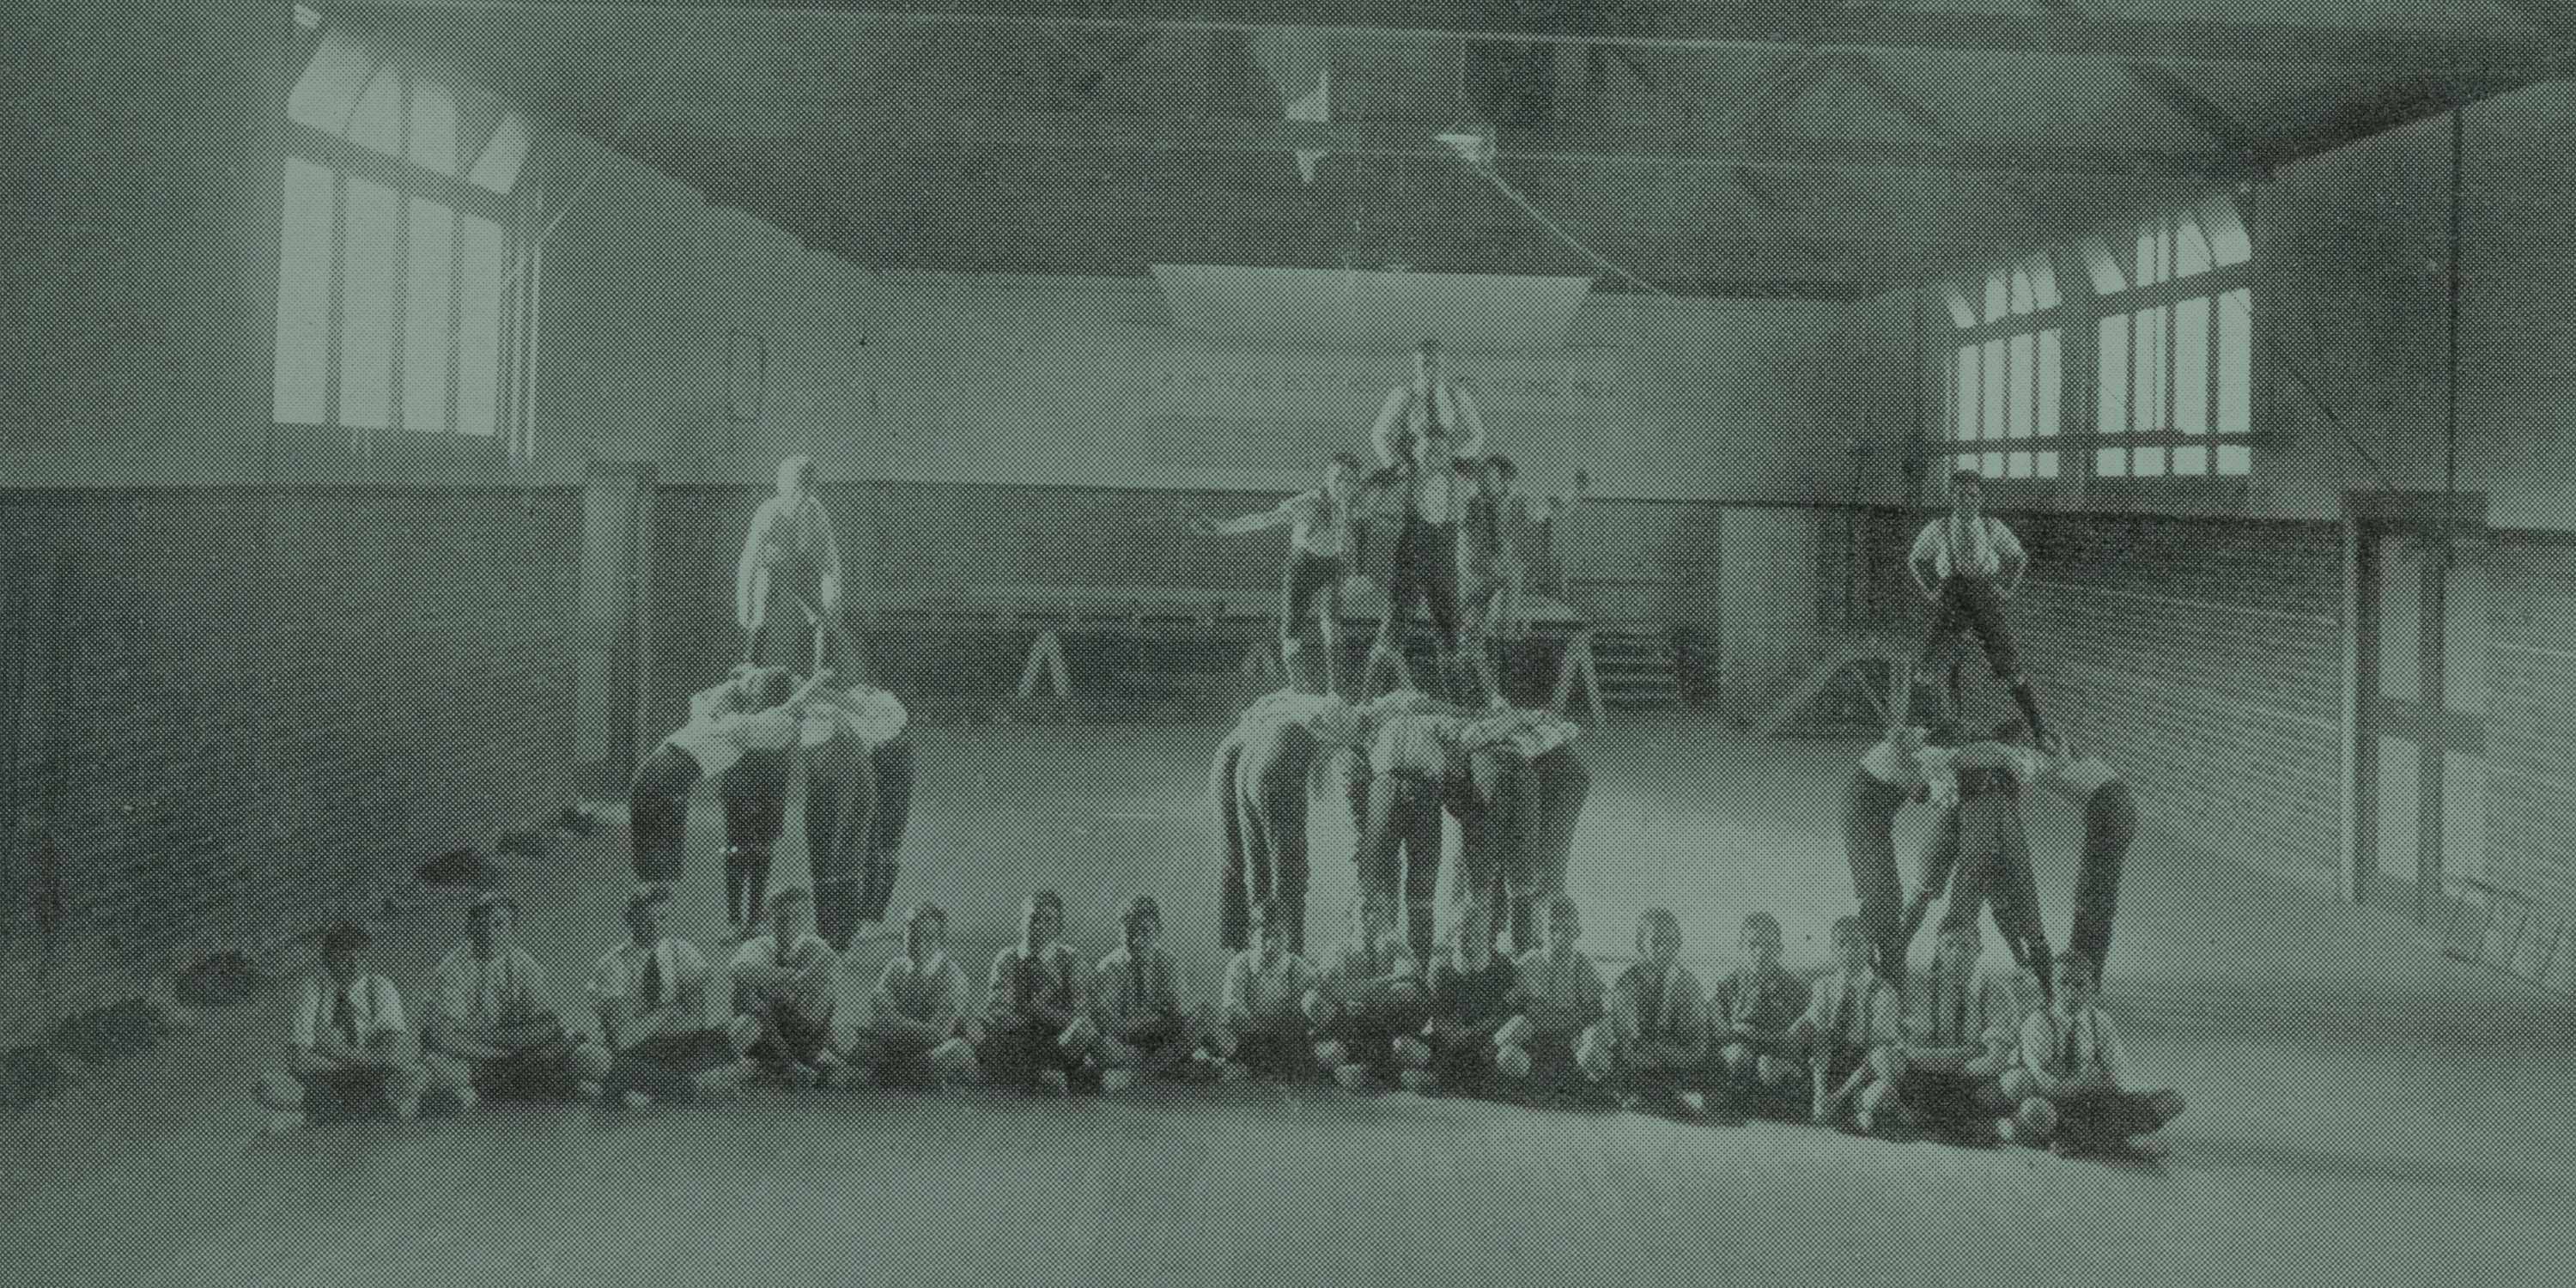 Gymnasium from prospectus, 1915.